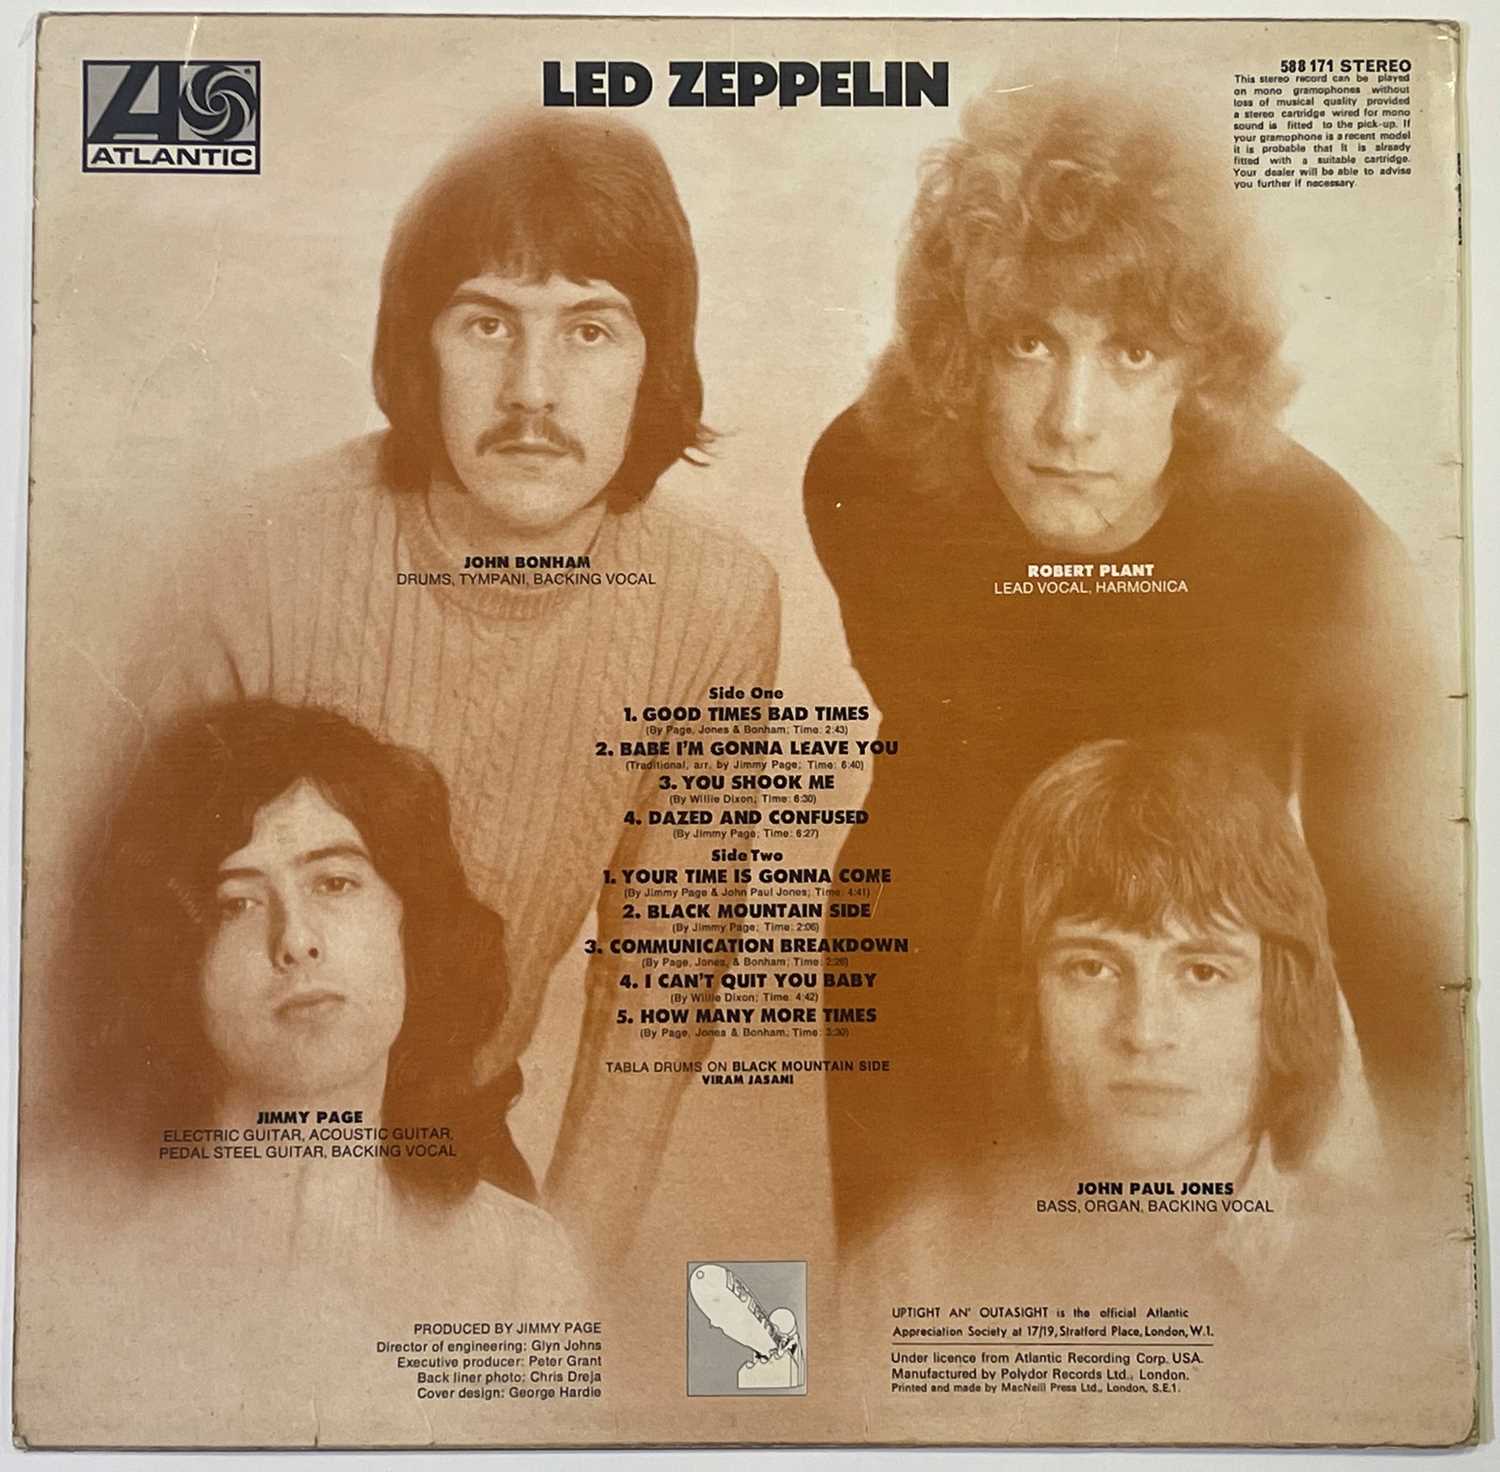 LED ZEPPELIN - LED ZEPPELIN 'I' LP (ORIGINAL UK 'TURQUOISE' LETTERING/SUPERHYPE COPY - ATLANTIC 5881 - Image 3 of 3